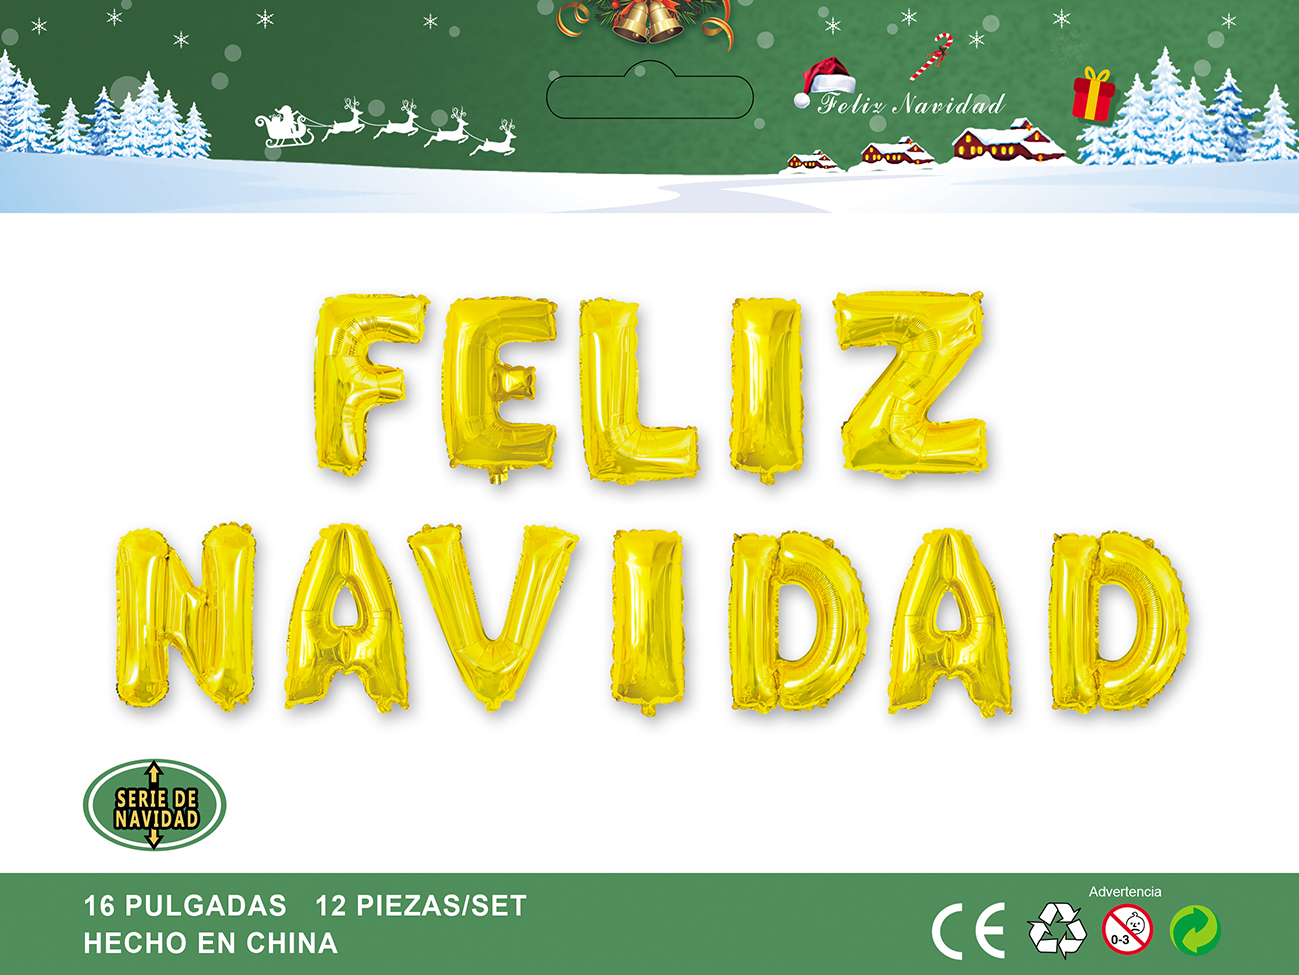  Horizontal version-Feliz Navidad (Ordinary Spanish)